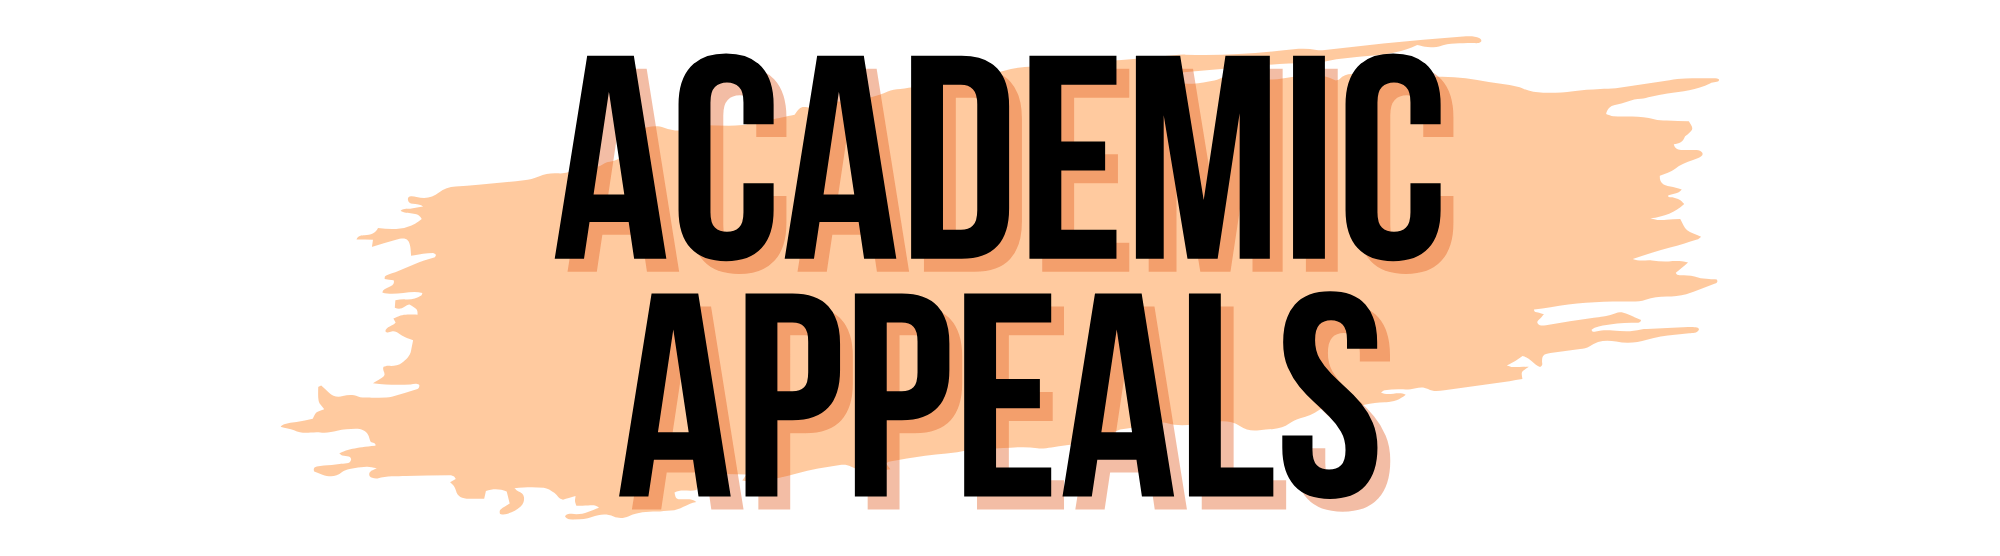 academic appeals